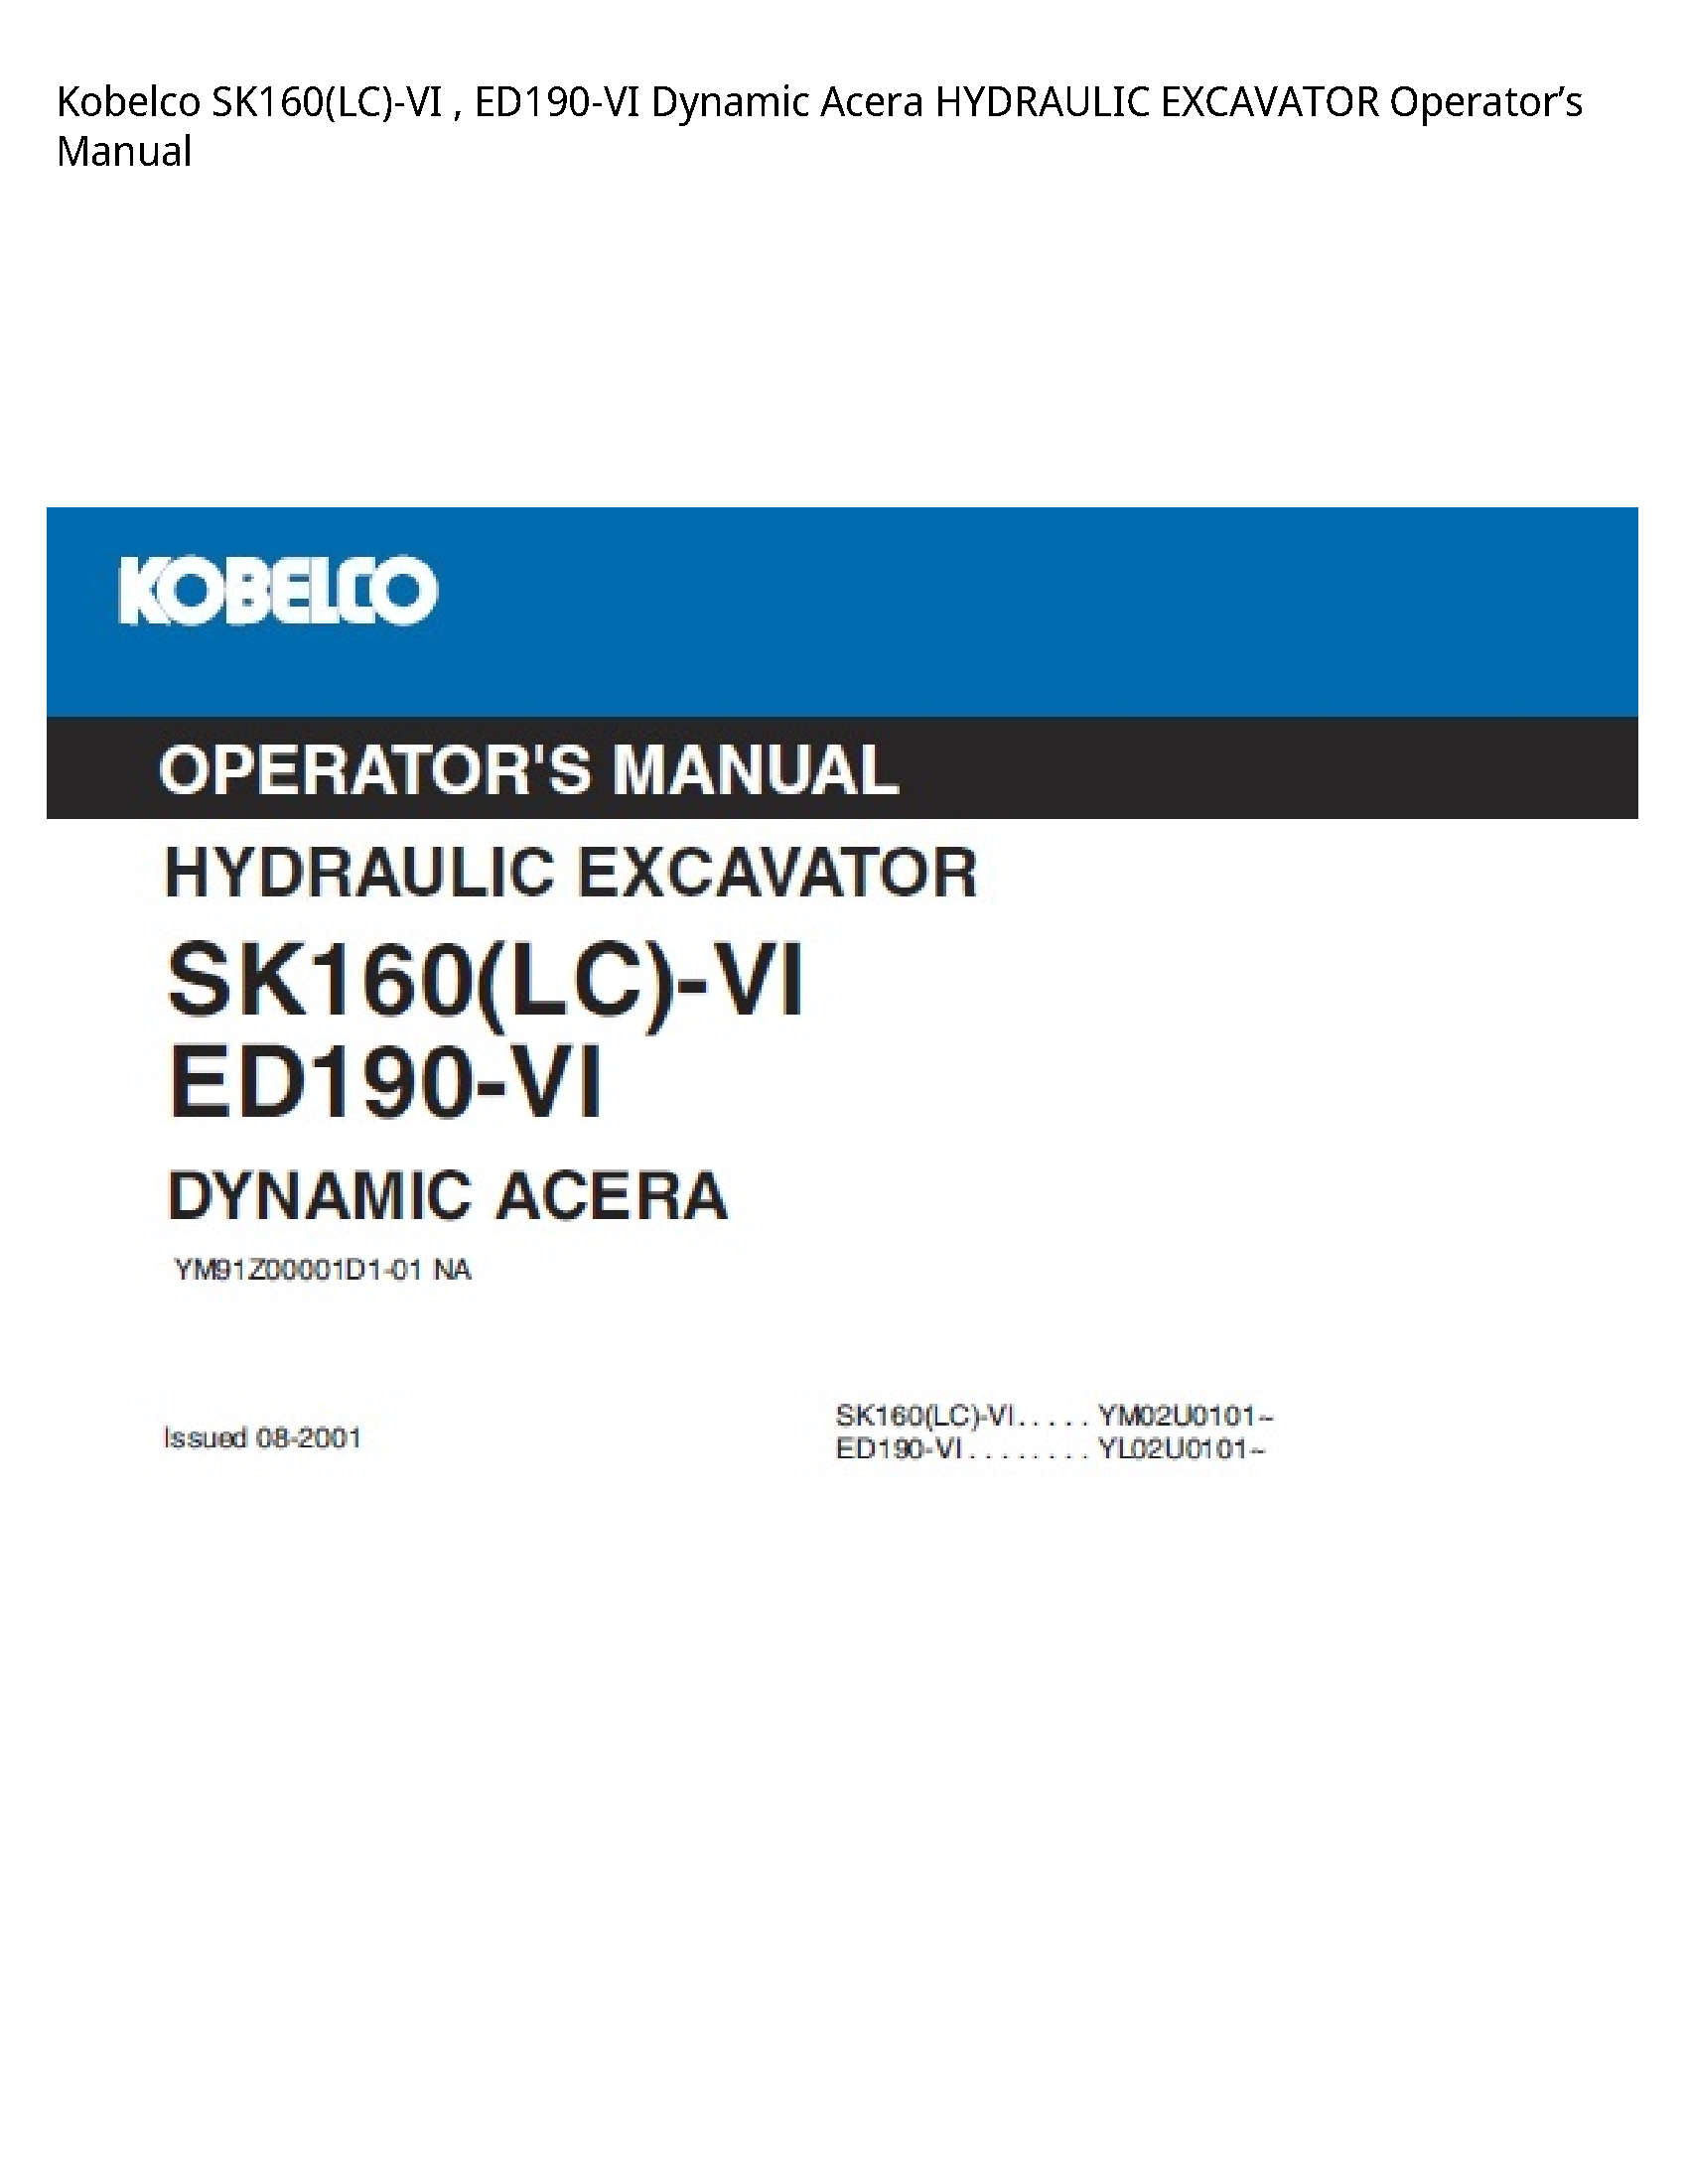 Kobelco SK160(LC)-VI Dynamic Acera HYDRAULIC EXCAVATOR Operator’s manual